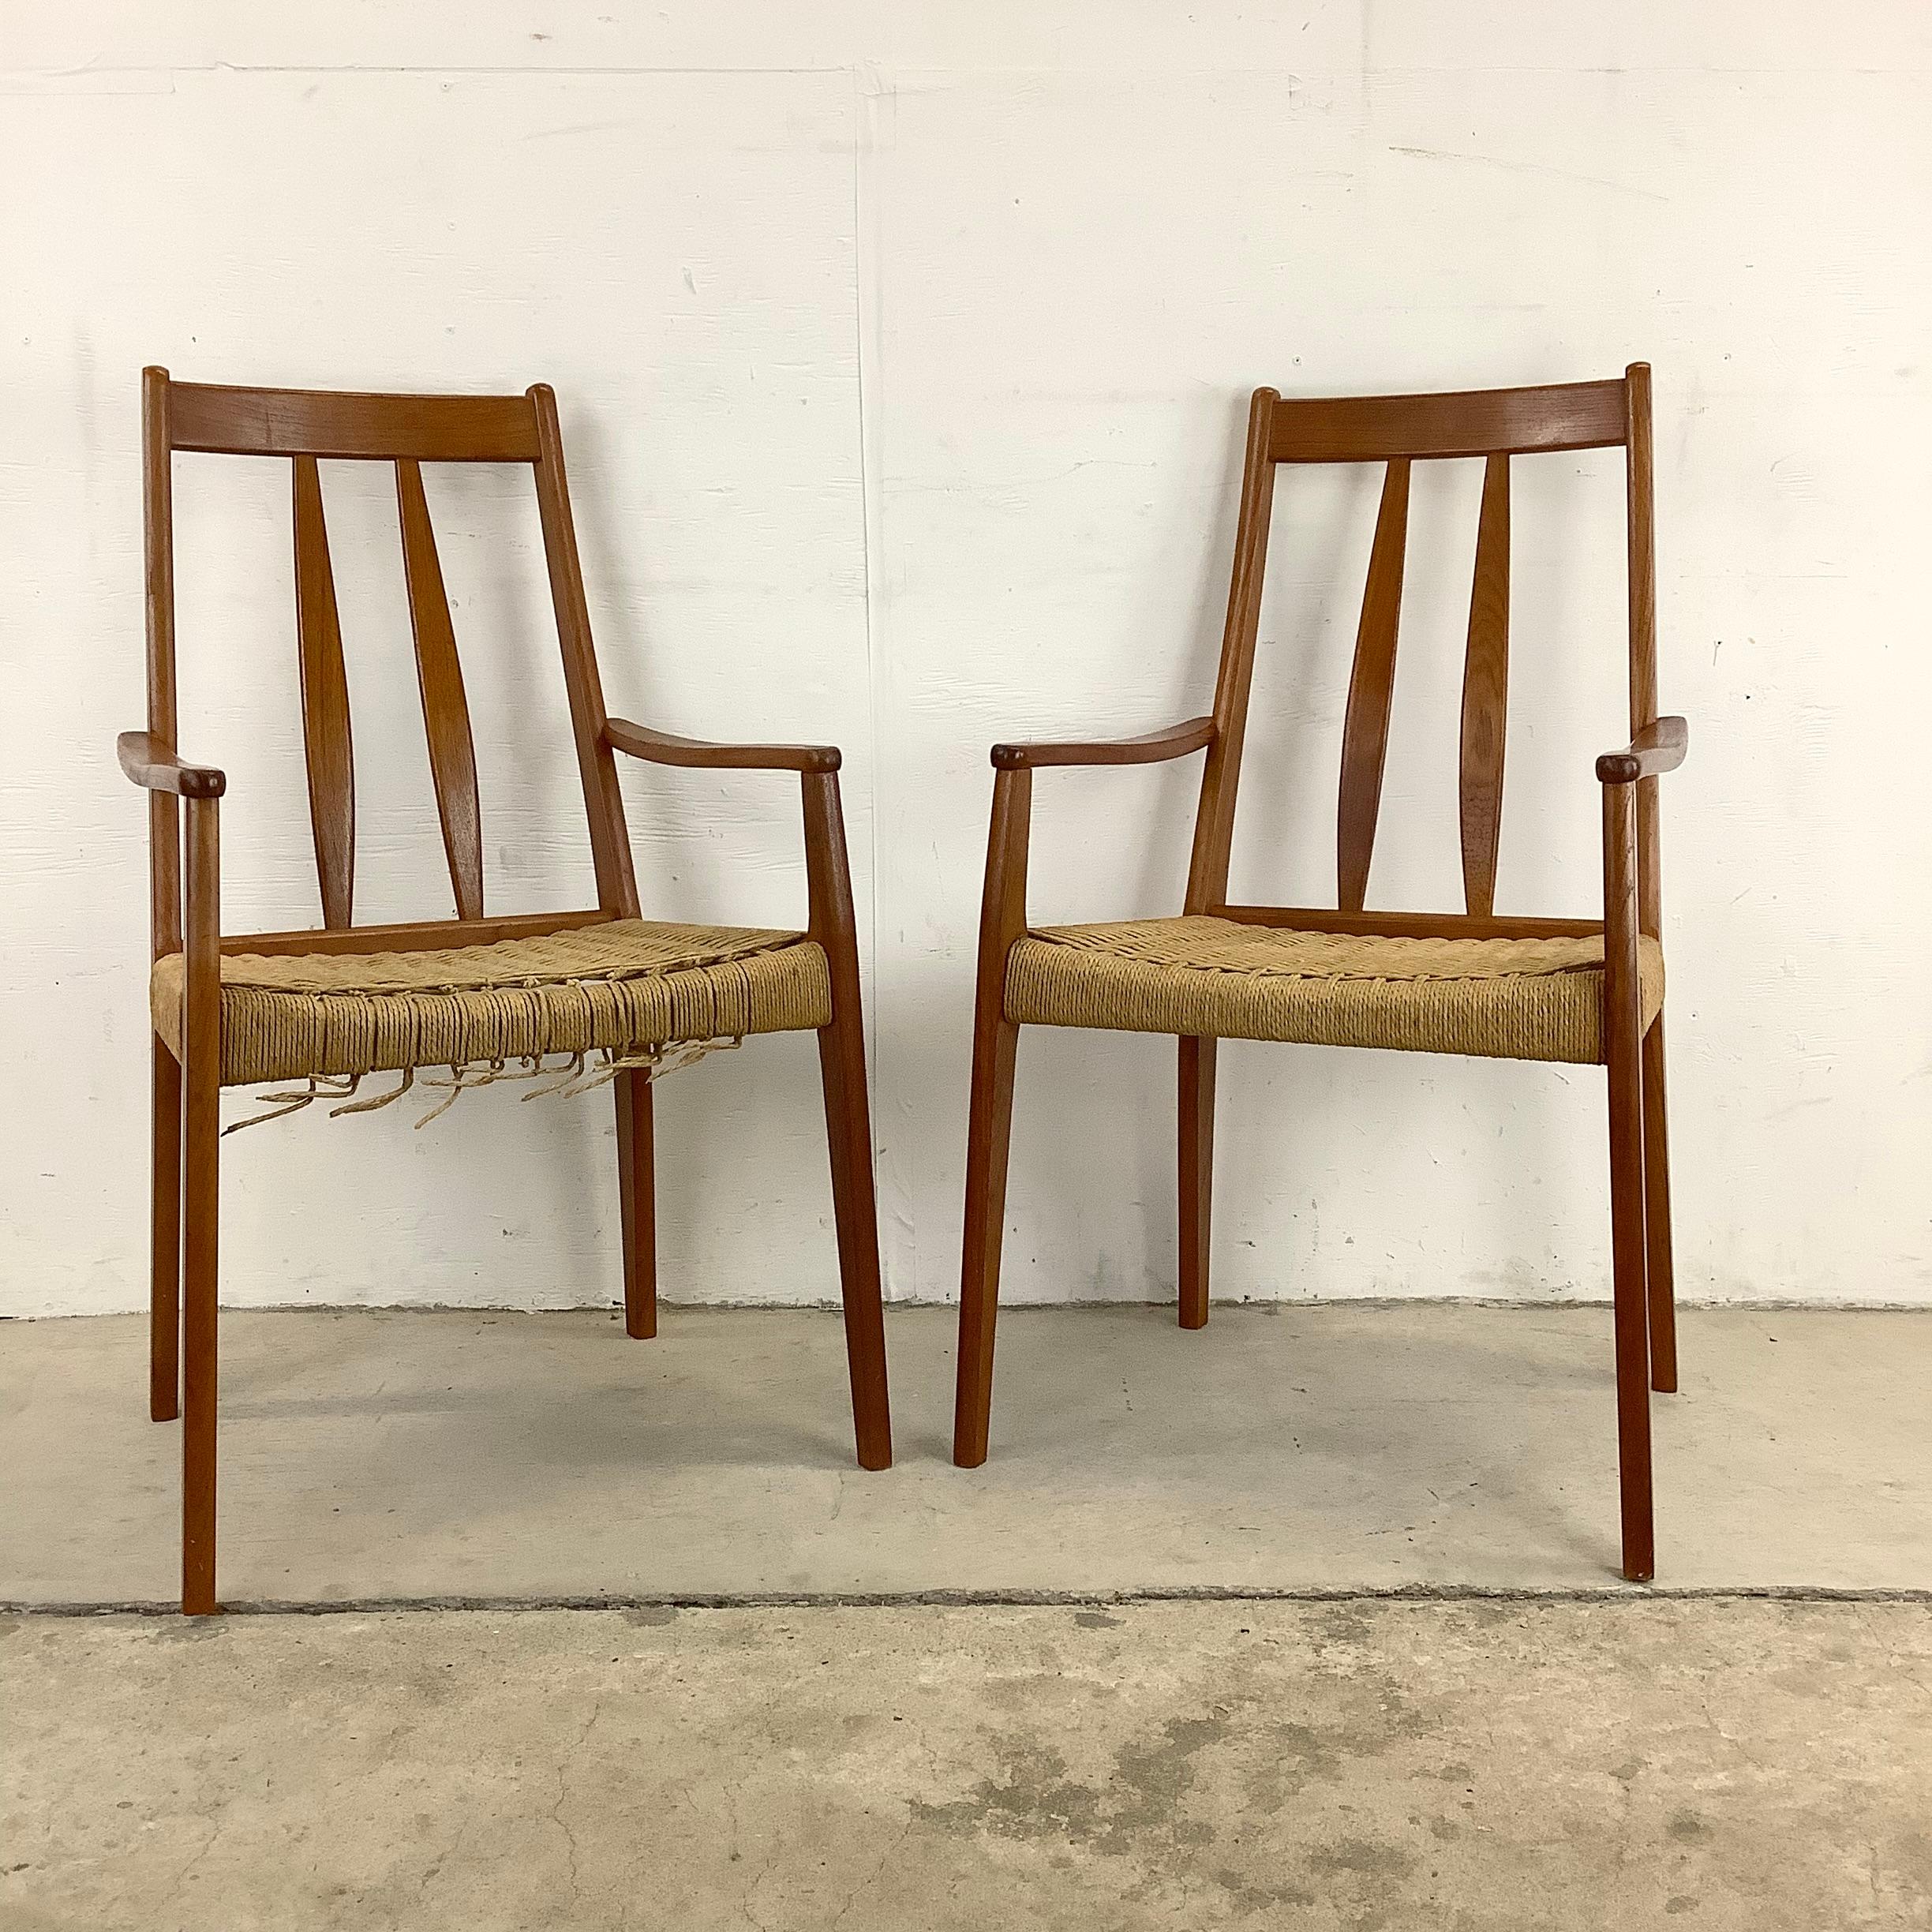 20th Century Scandinavian Modern Rope Seat Teak Dining Chairs, Set of Four